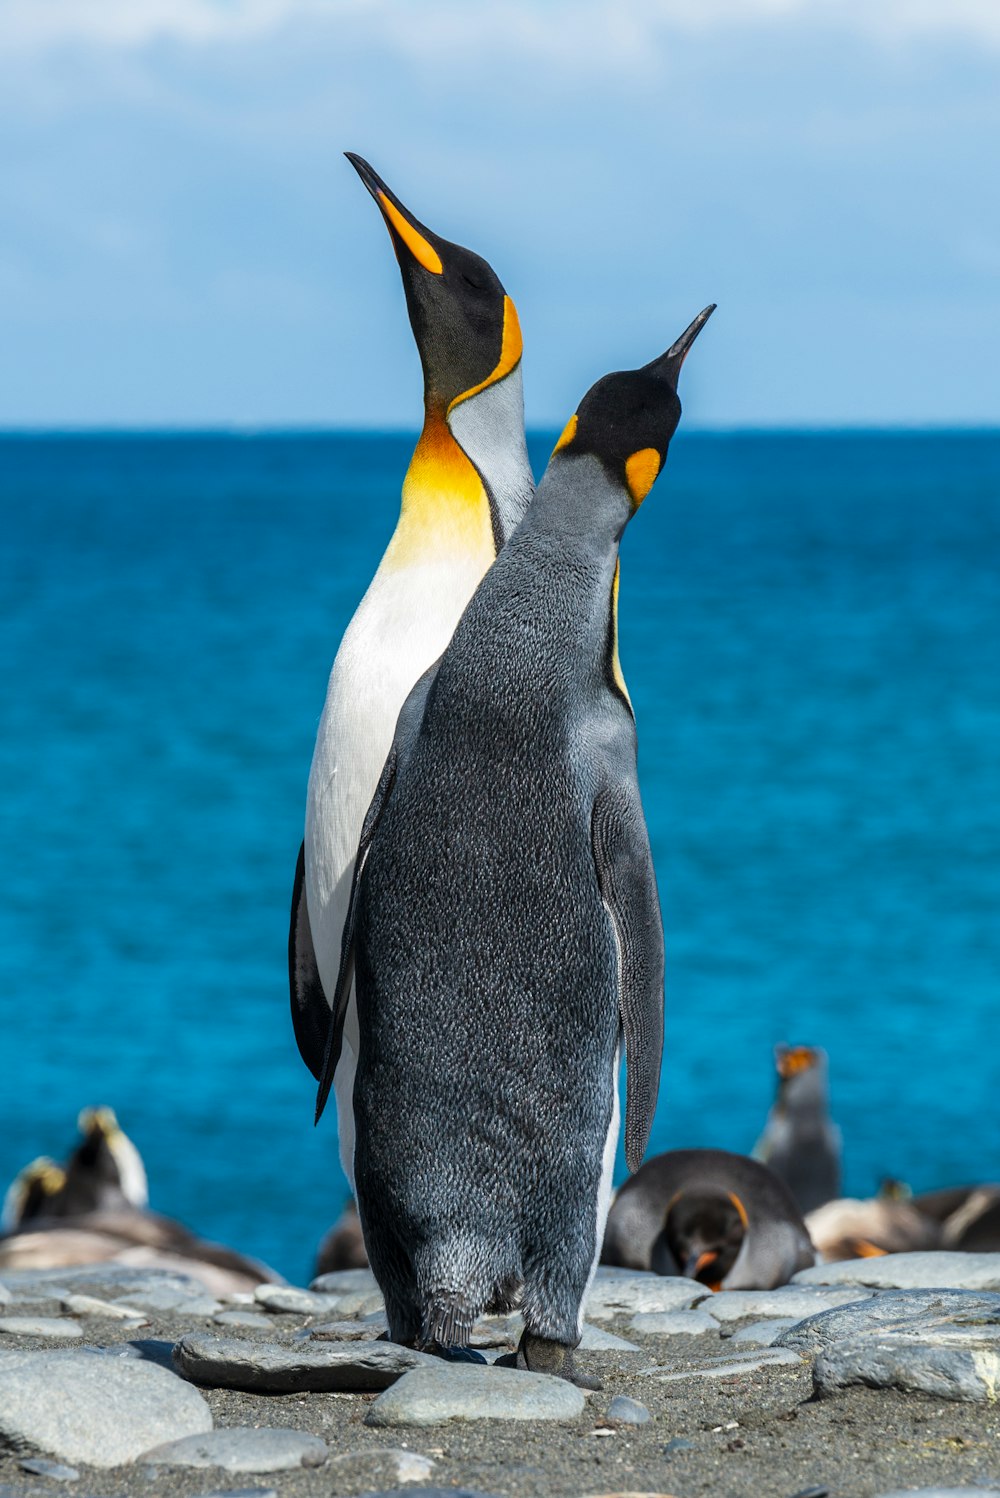 500 Best Penguin Pictures HD Download Free Images On Unsplash